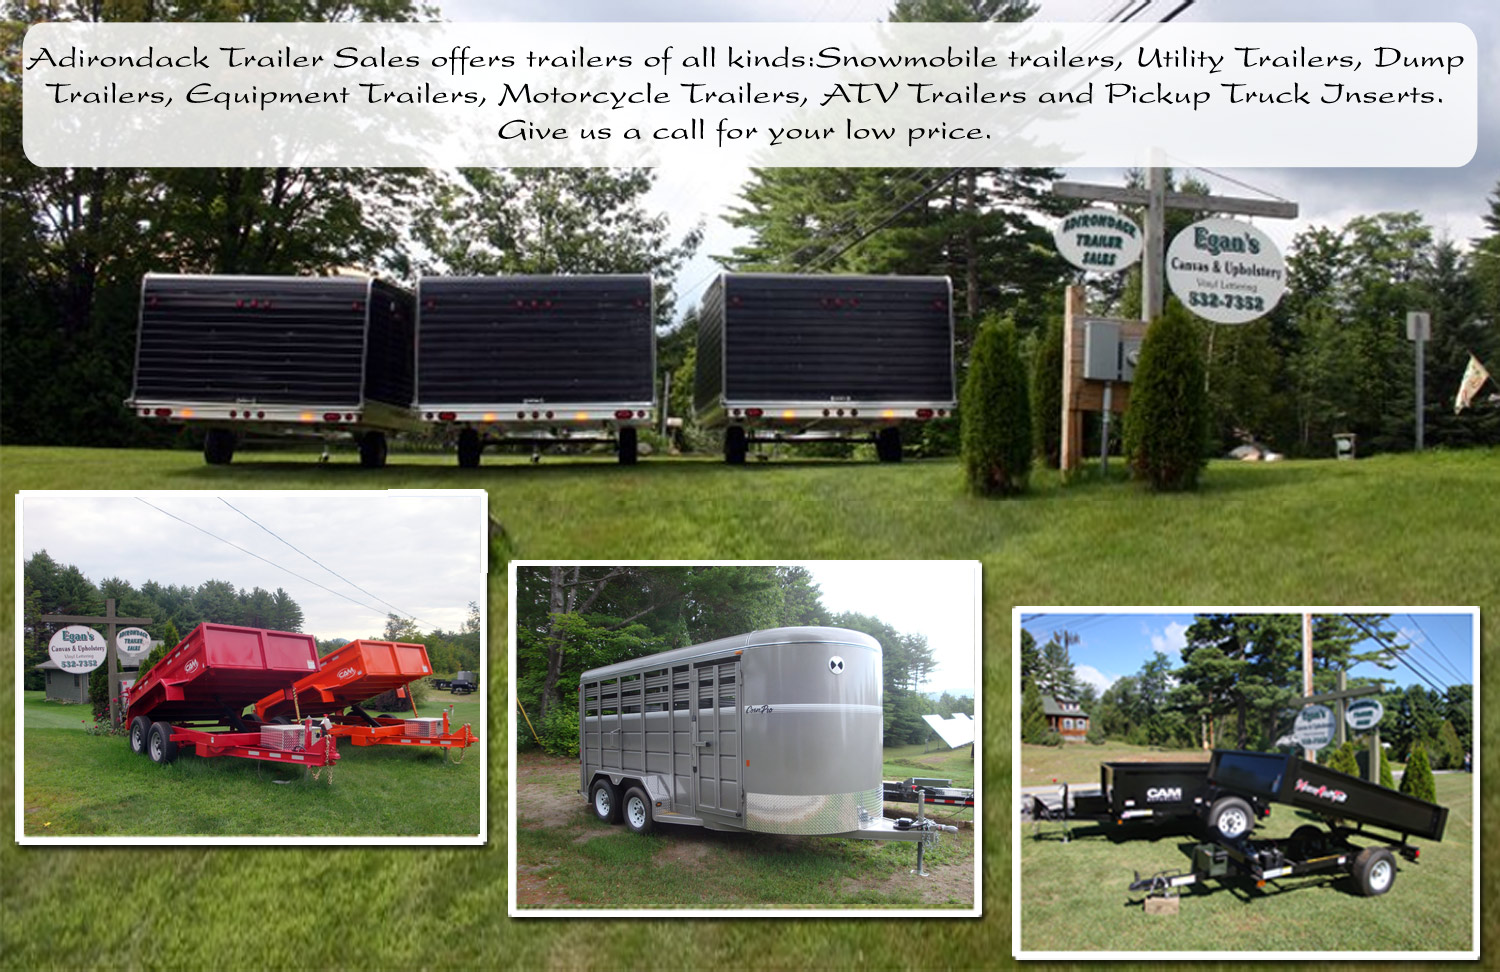 Snowmobile trailers,Utility trailers,Dump trailers,Equipment trailers,Car haulers,Motorcycle trailers,ATV trailers,Pickup truck inserts